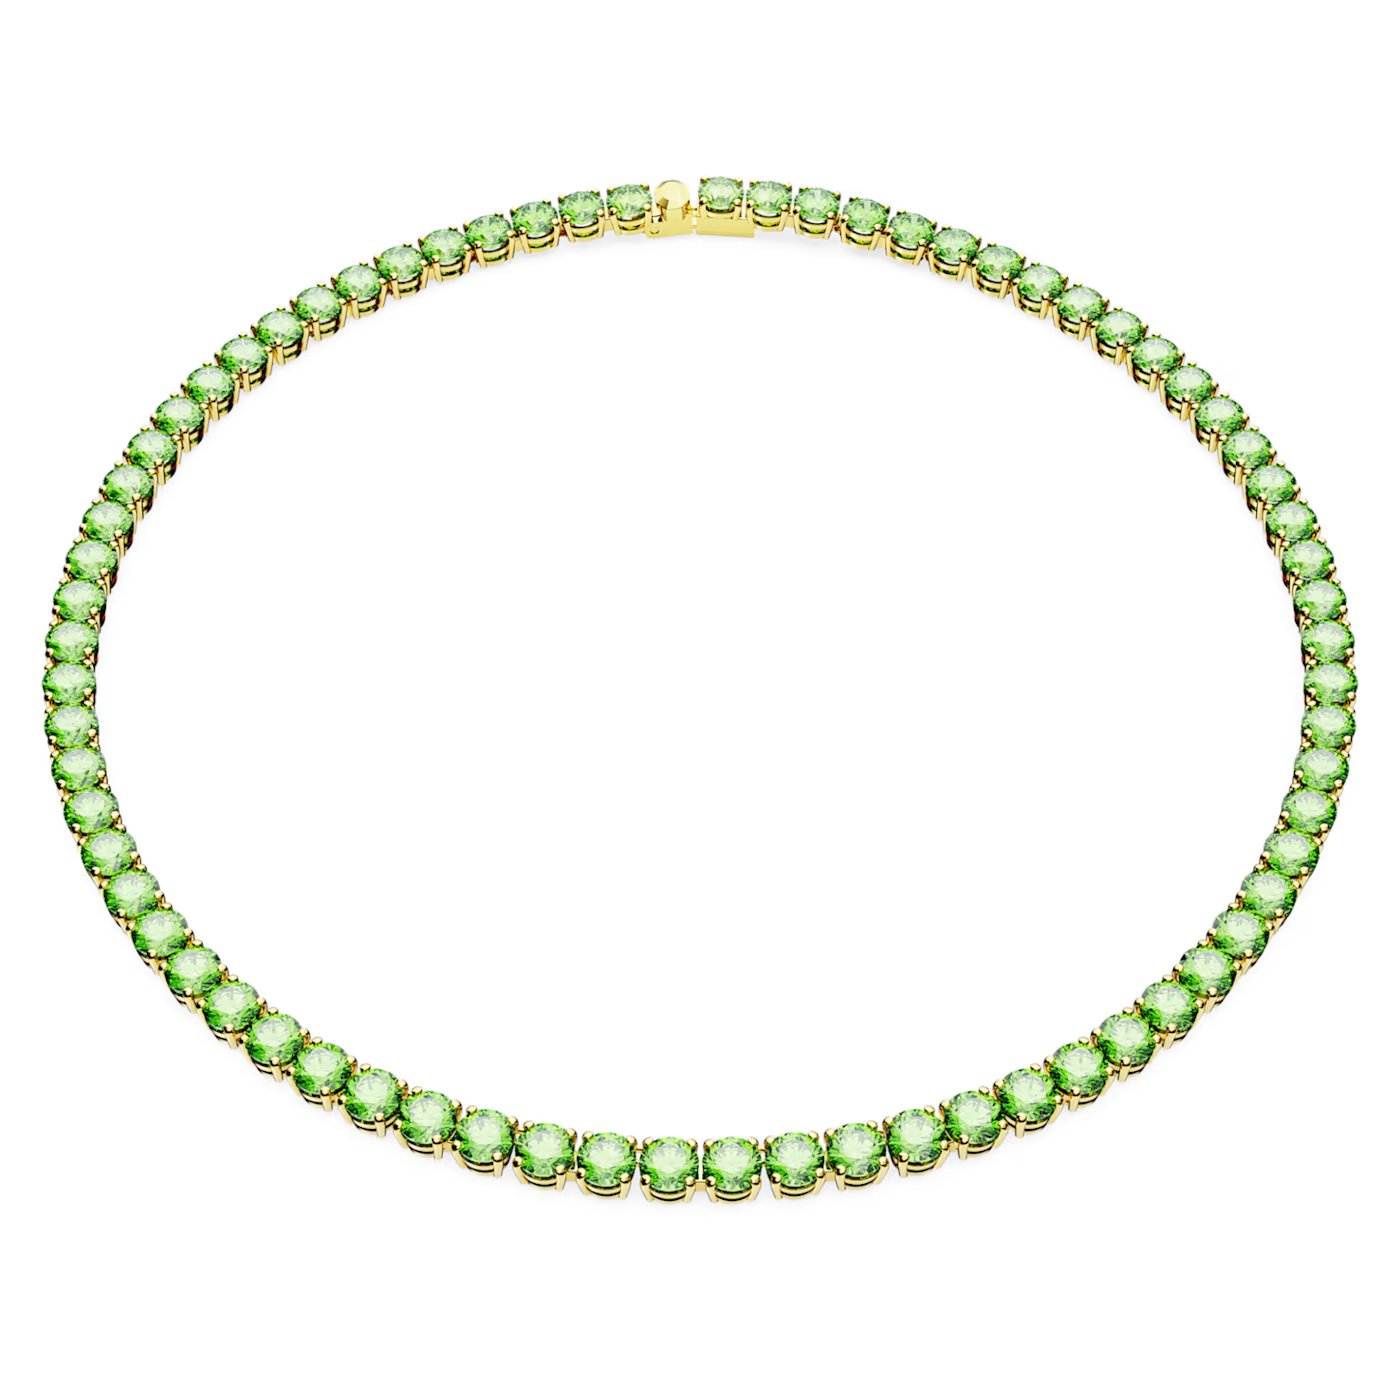 Matrix Tennis necklace